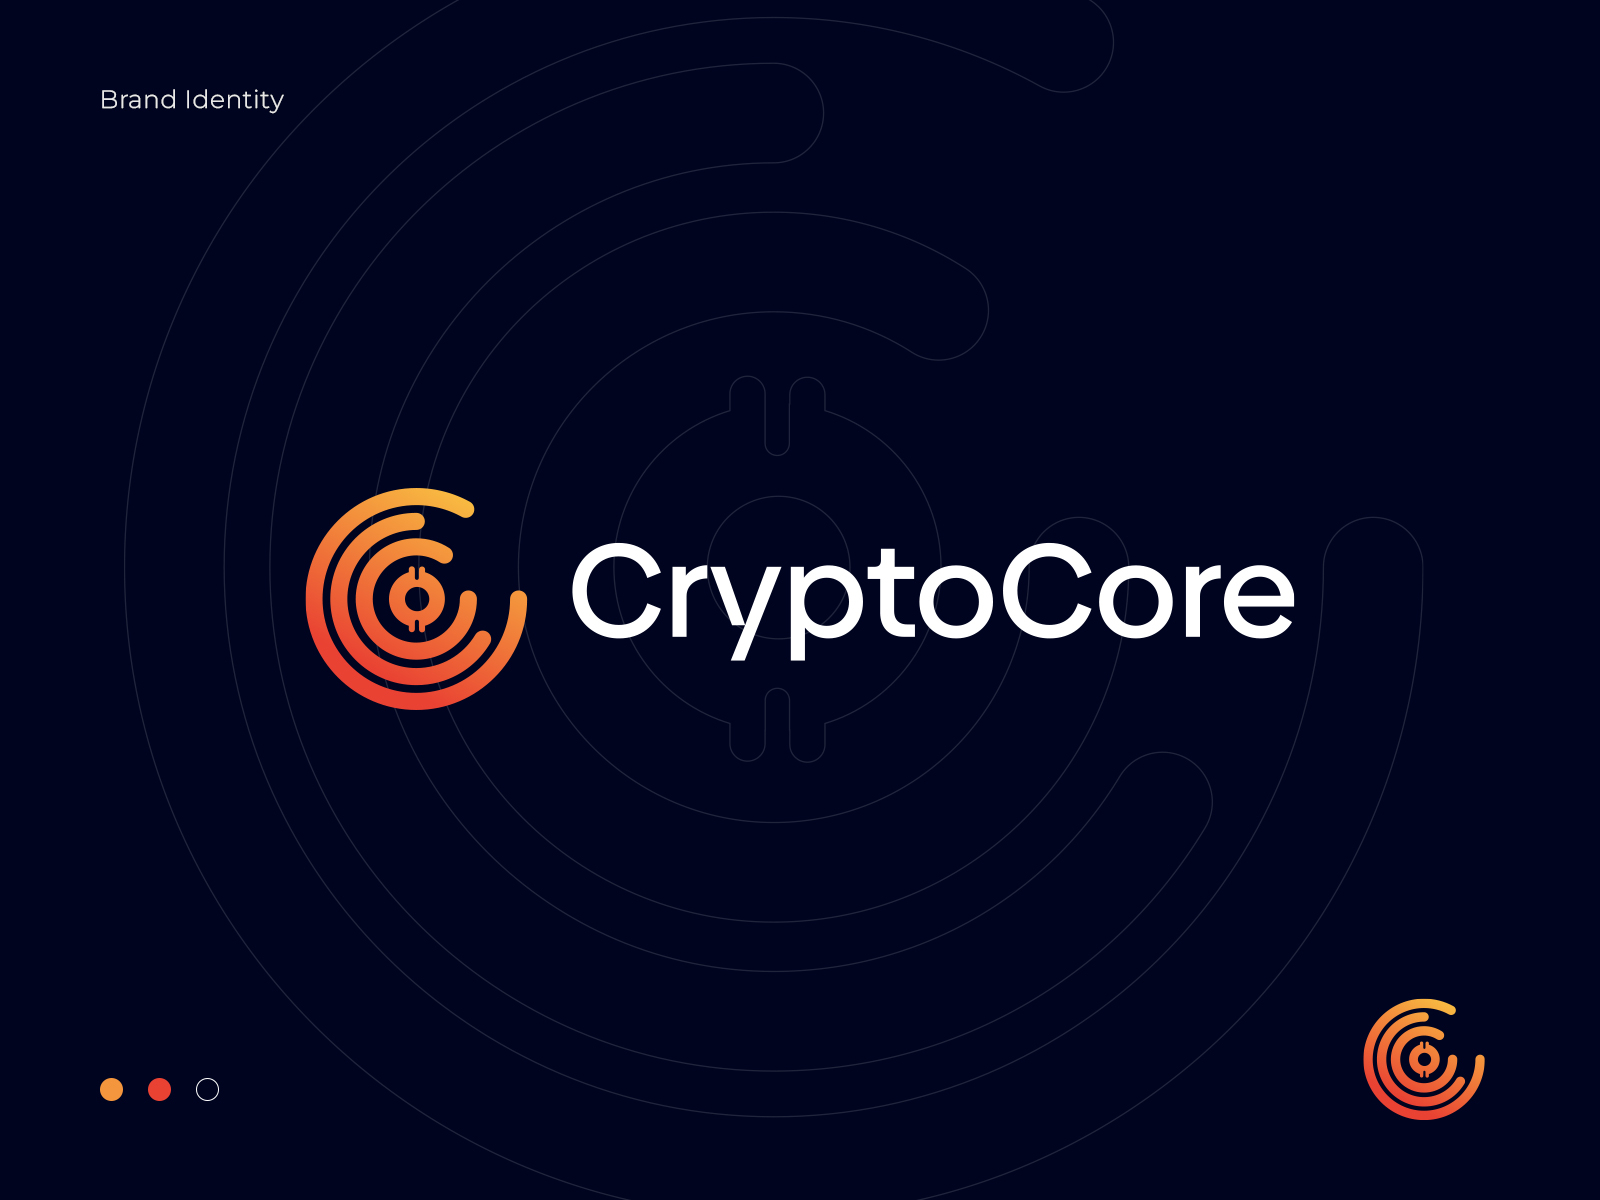 core crypto